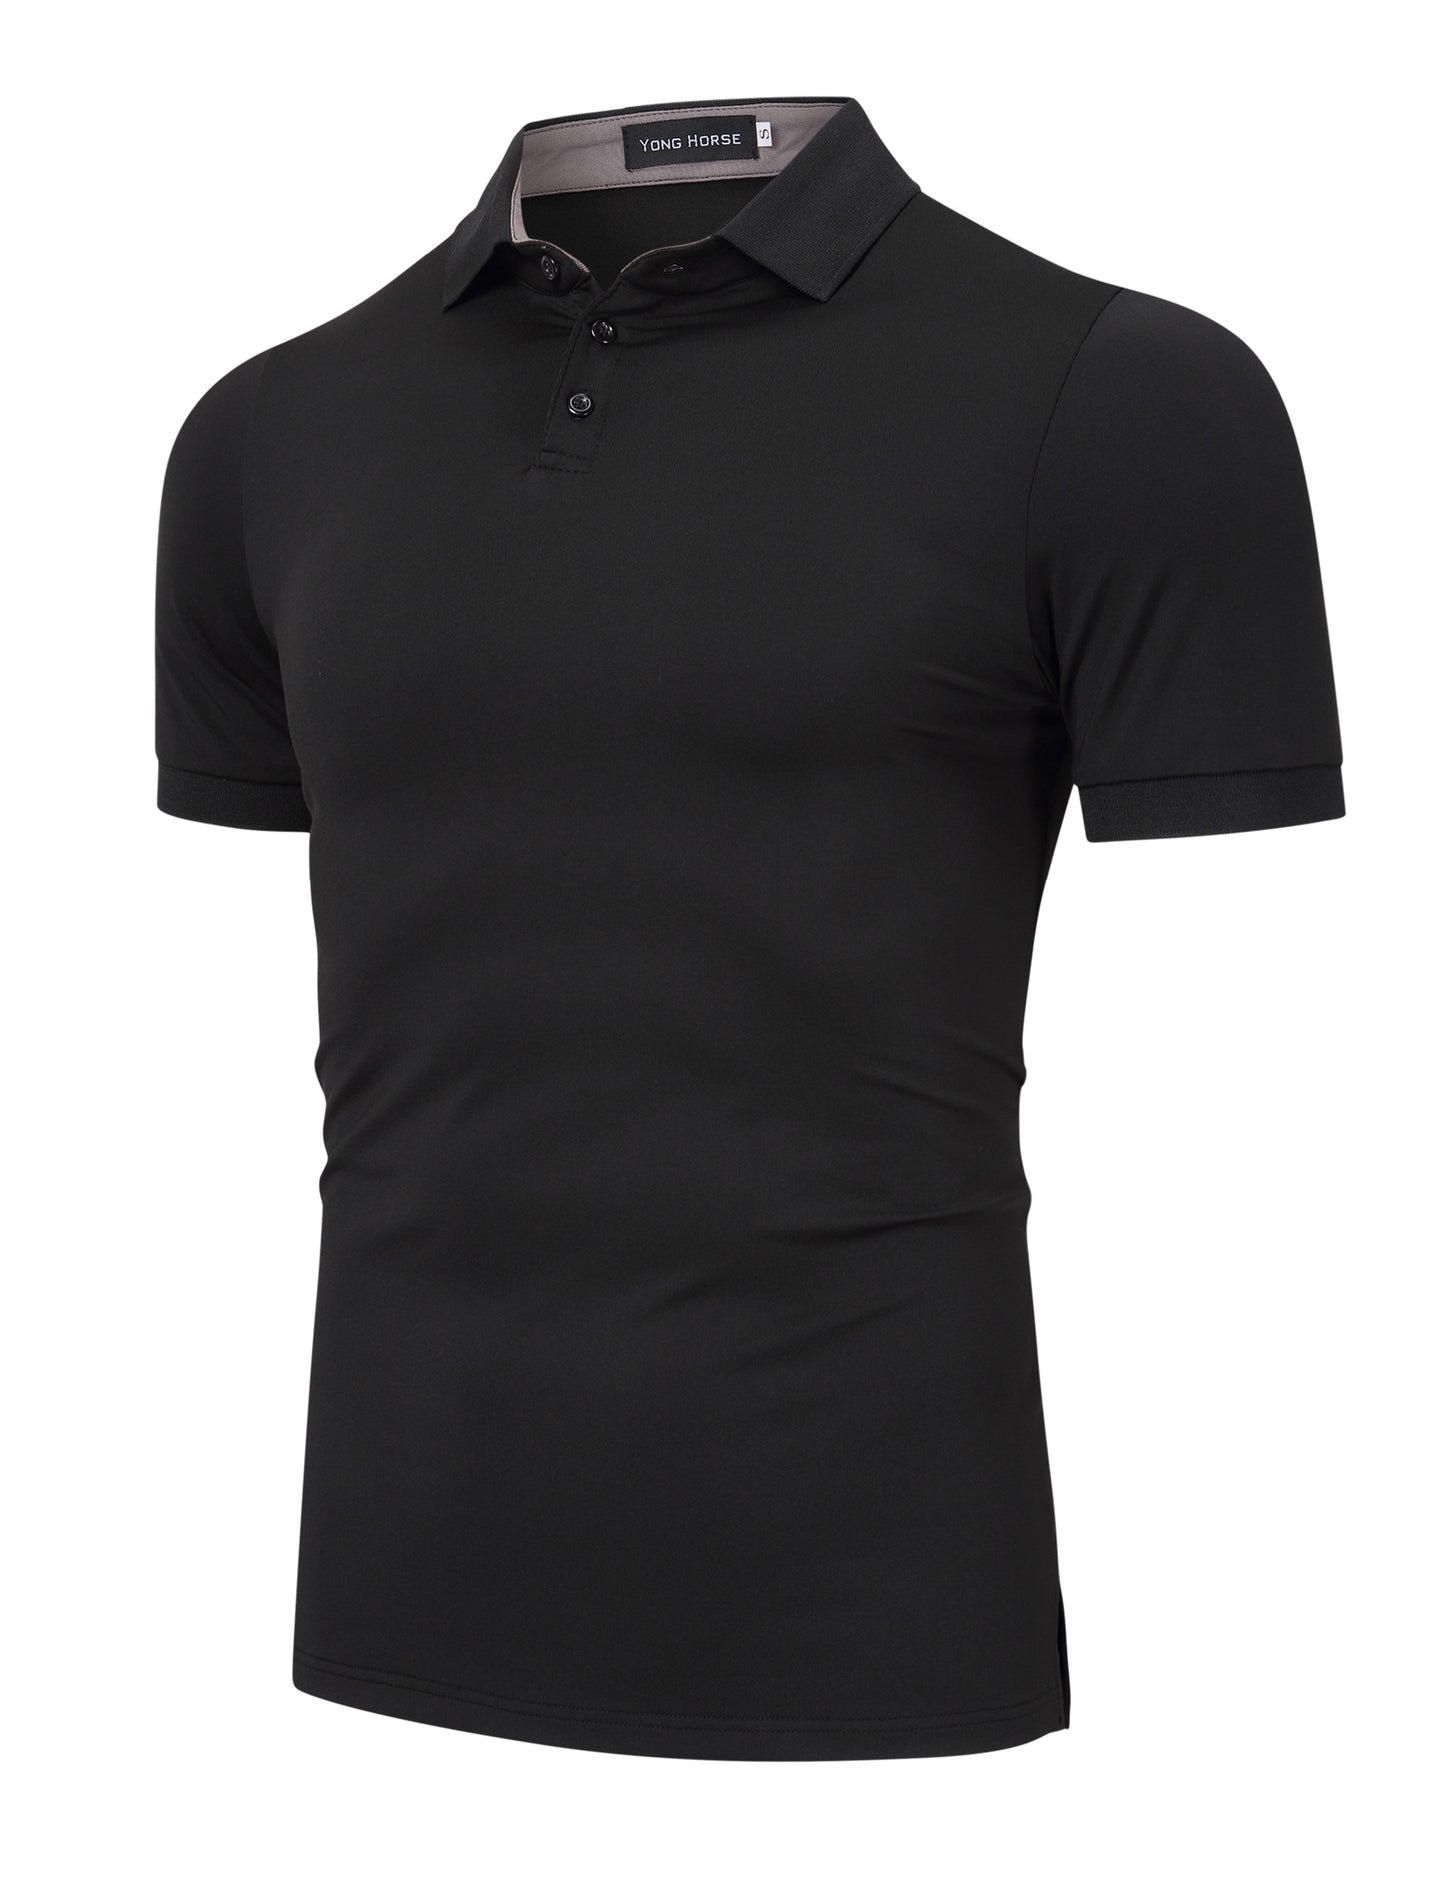 YESFASHION Men's Casual Golf Polo Short Sleeve Shirts